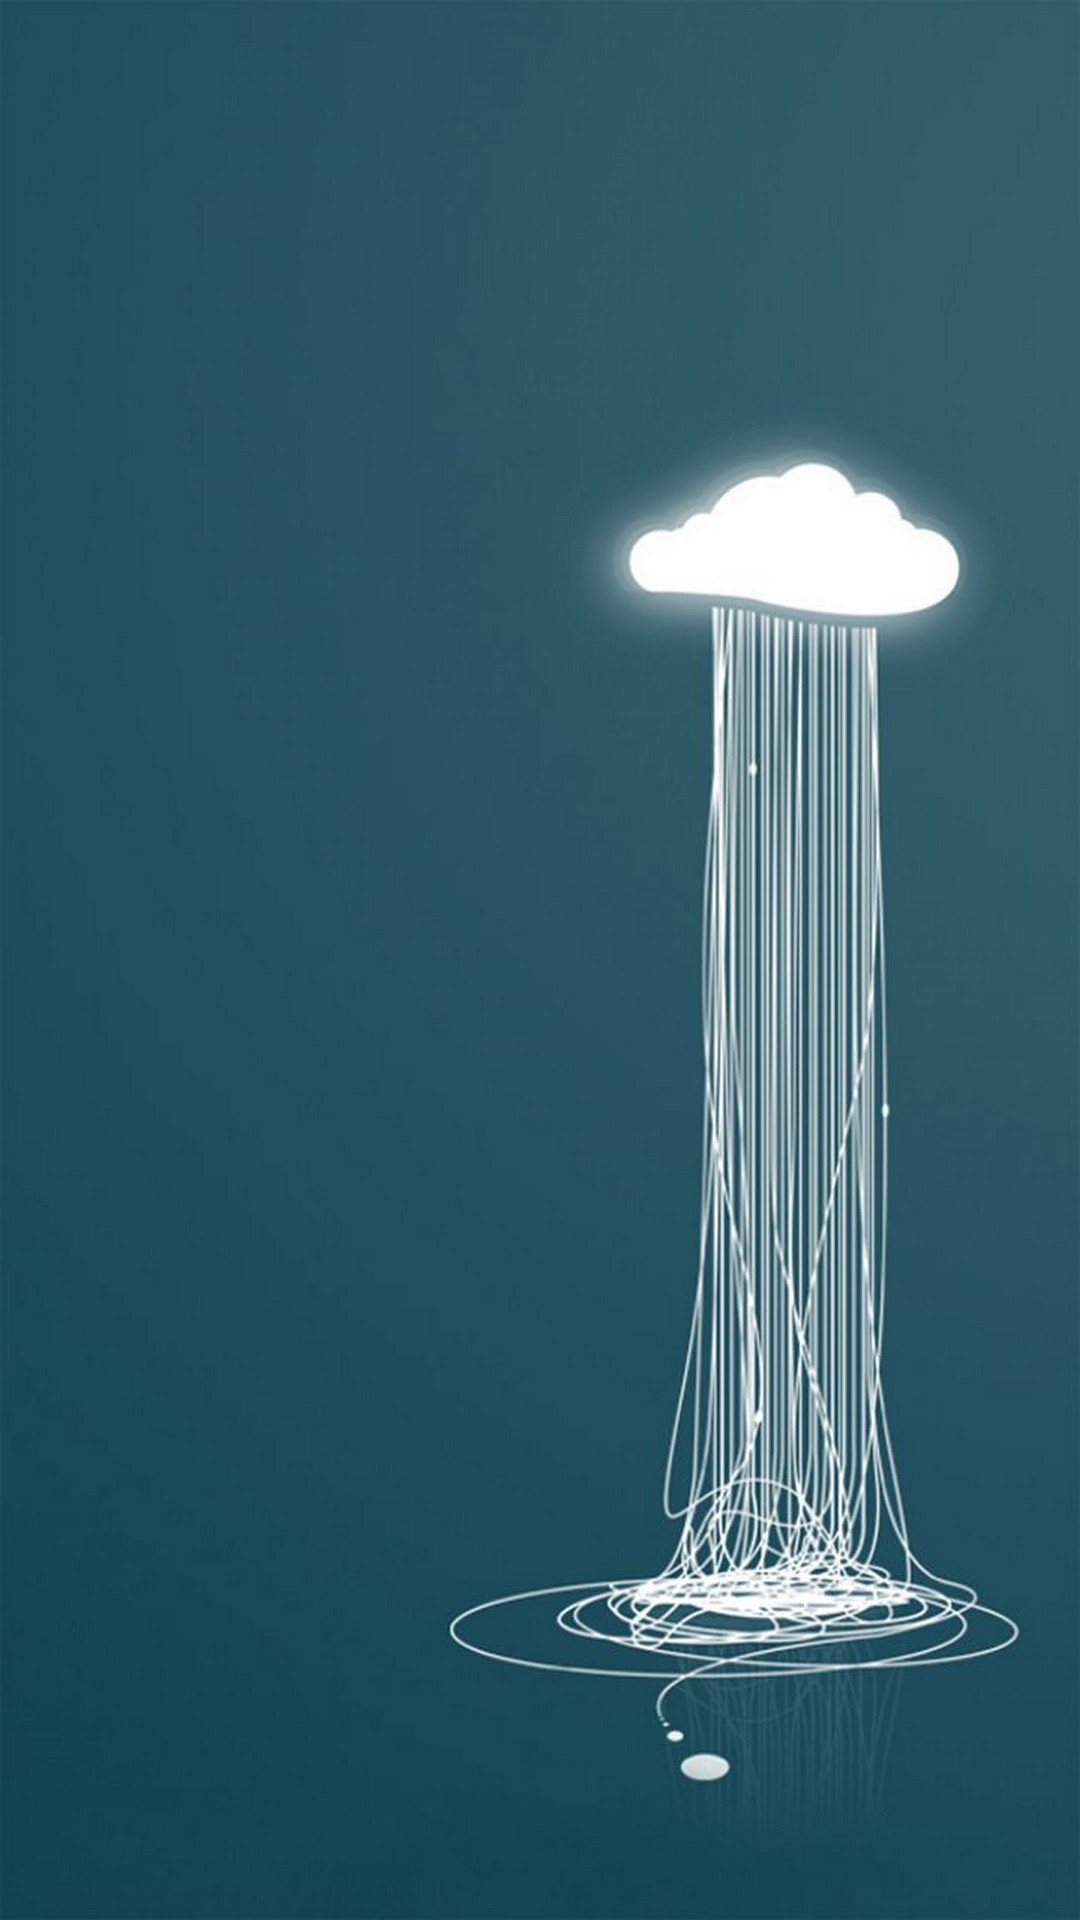 Wallpaper Animated Rain iPhone